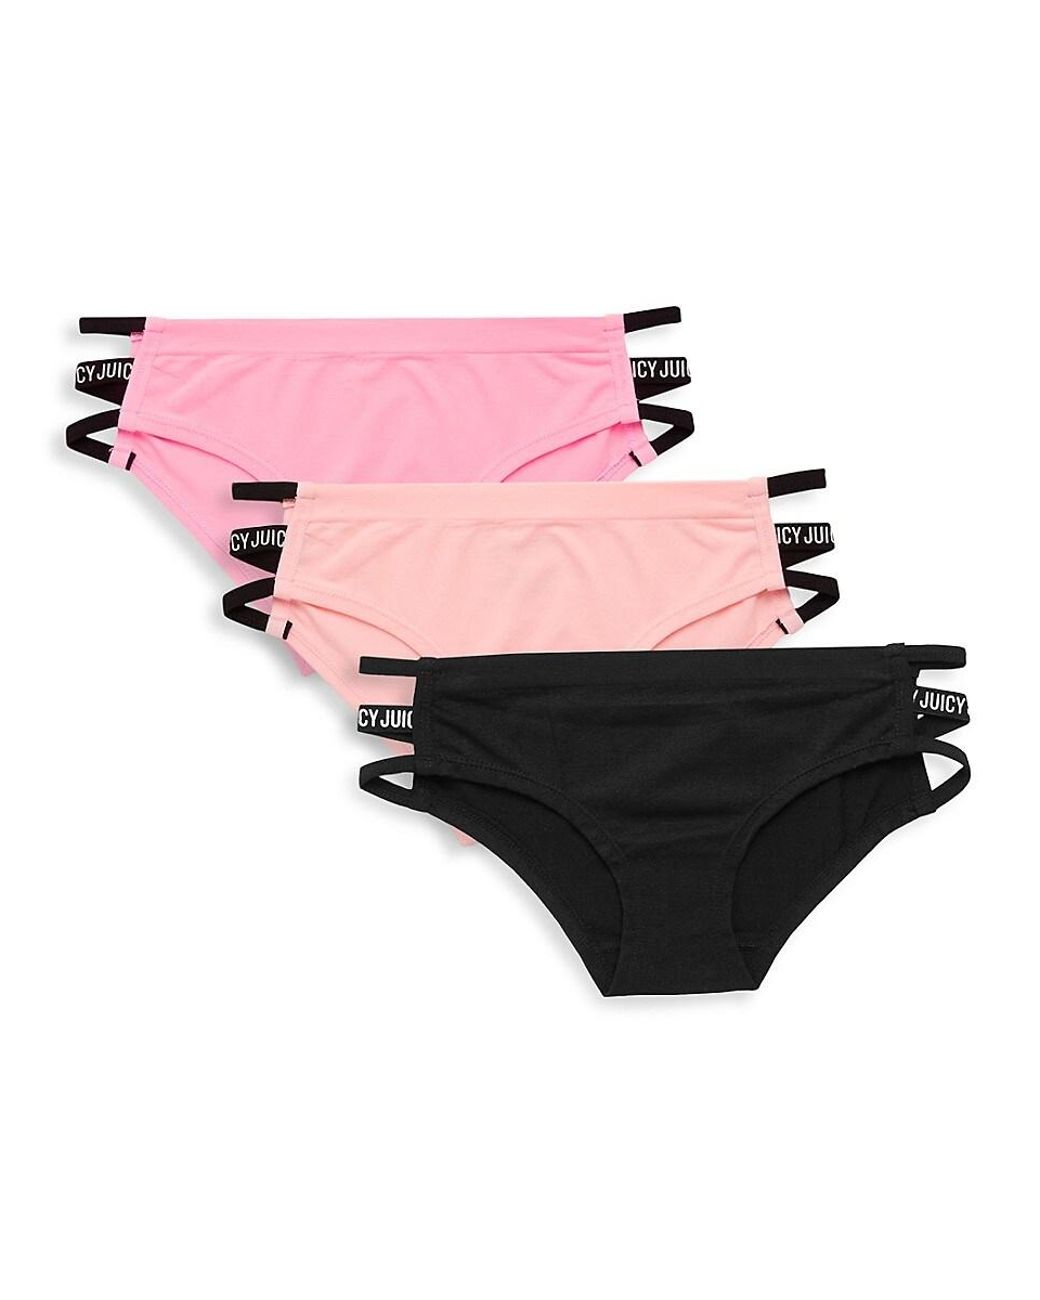 https://cdna.lystit.com/1040/1300/n/photos/saksoff5th/a55fbf29/juicy-couture-Pink-3-pack-Strappy-Bikini-Panties.jpeg